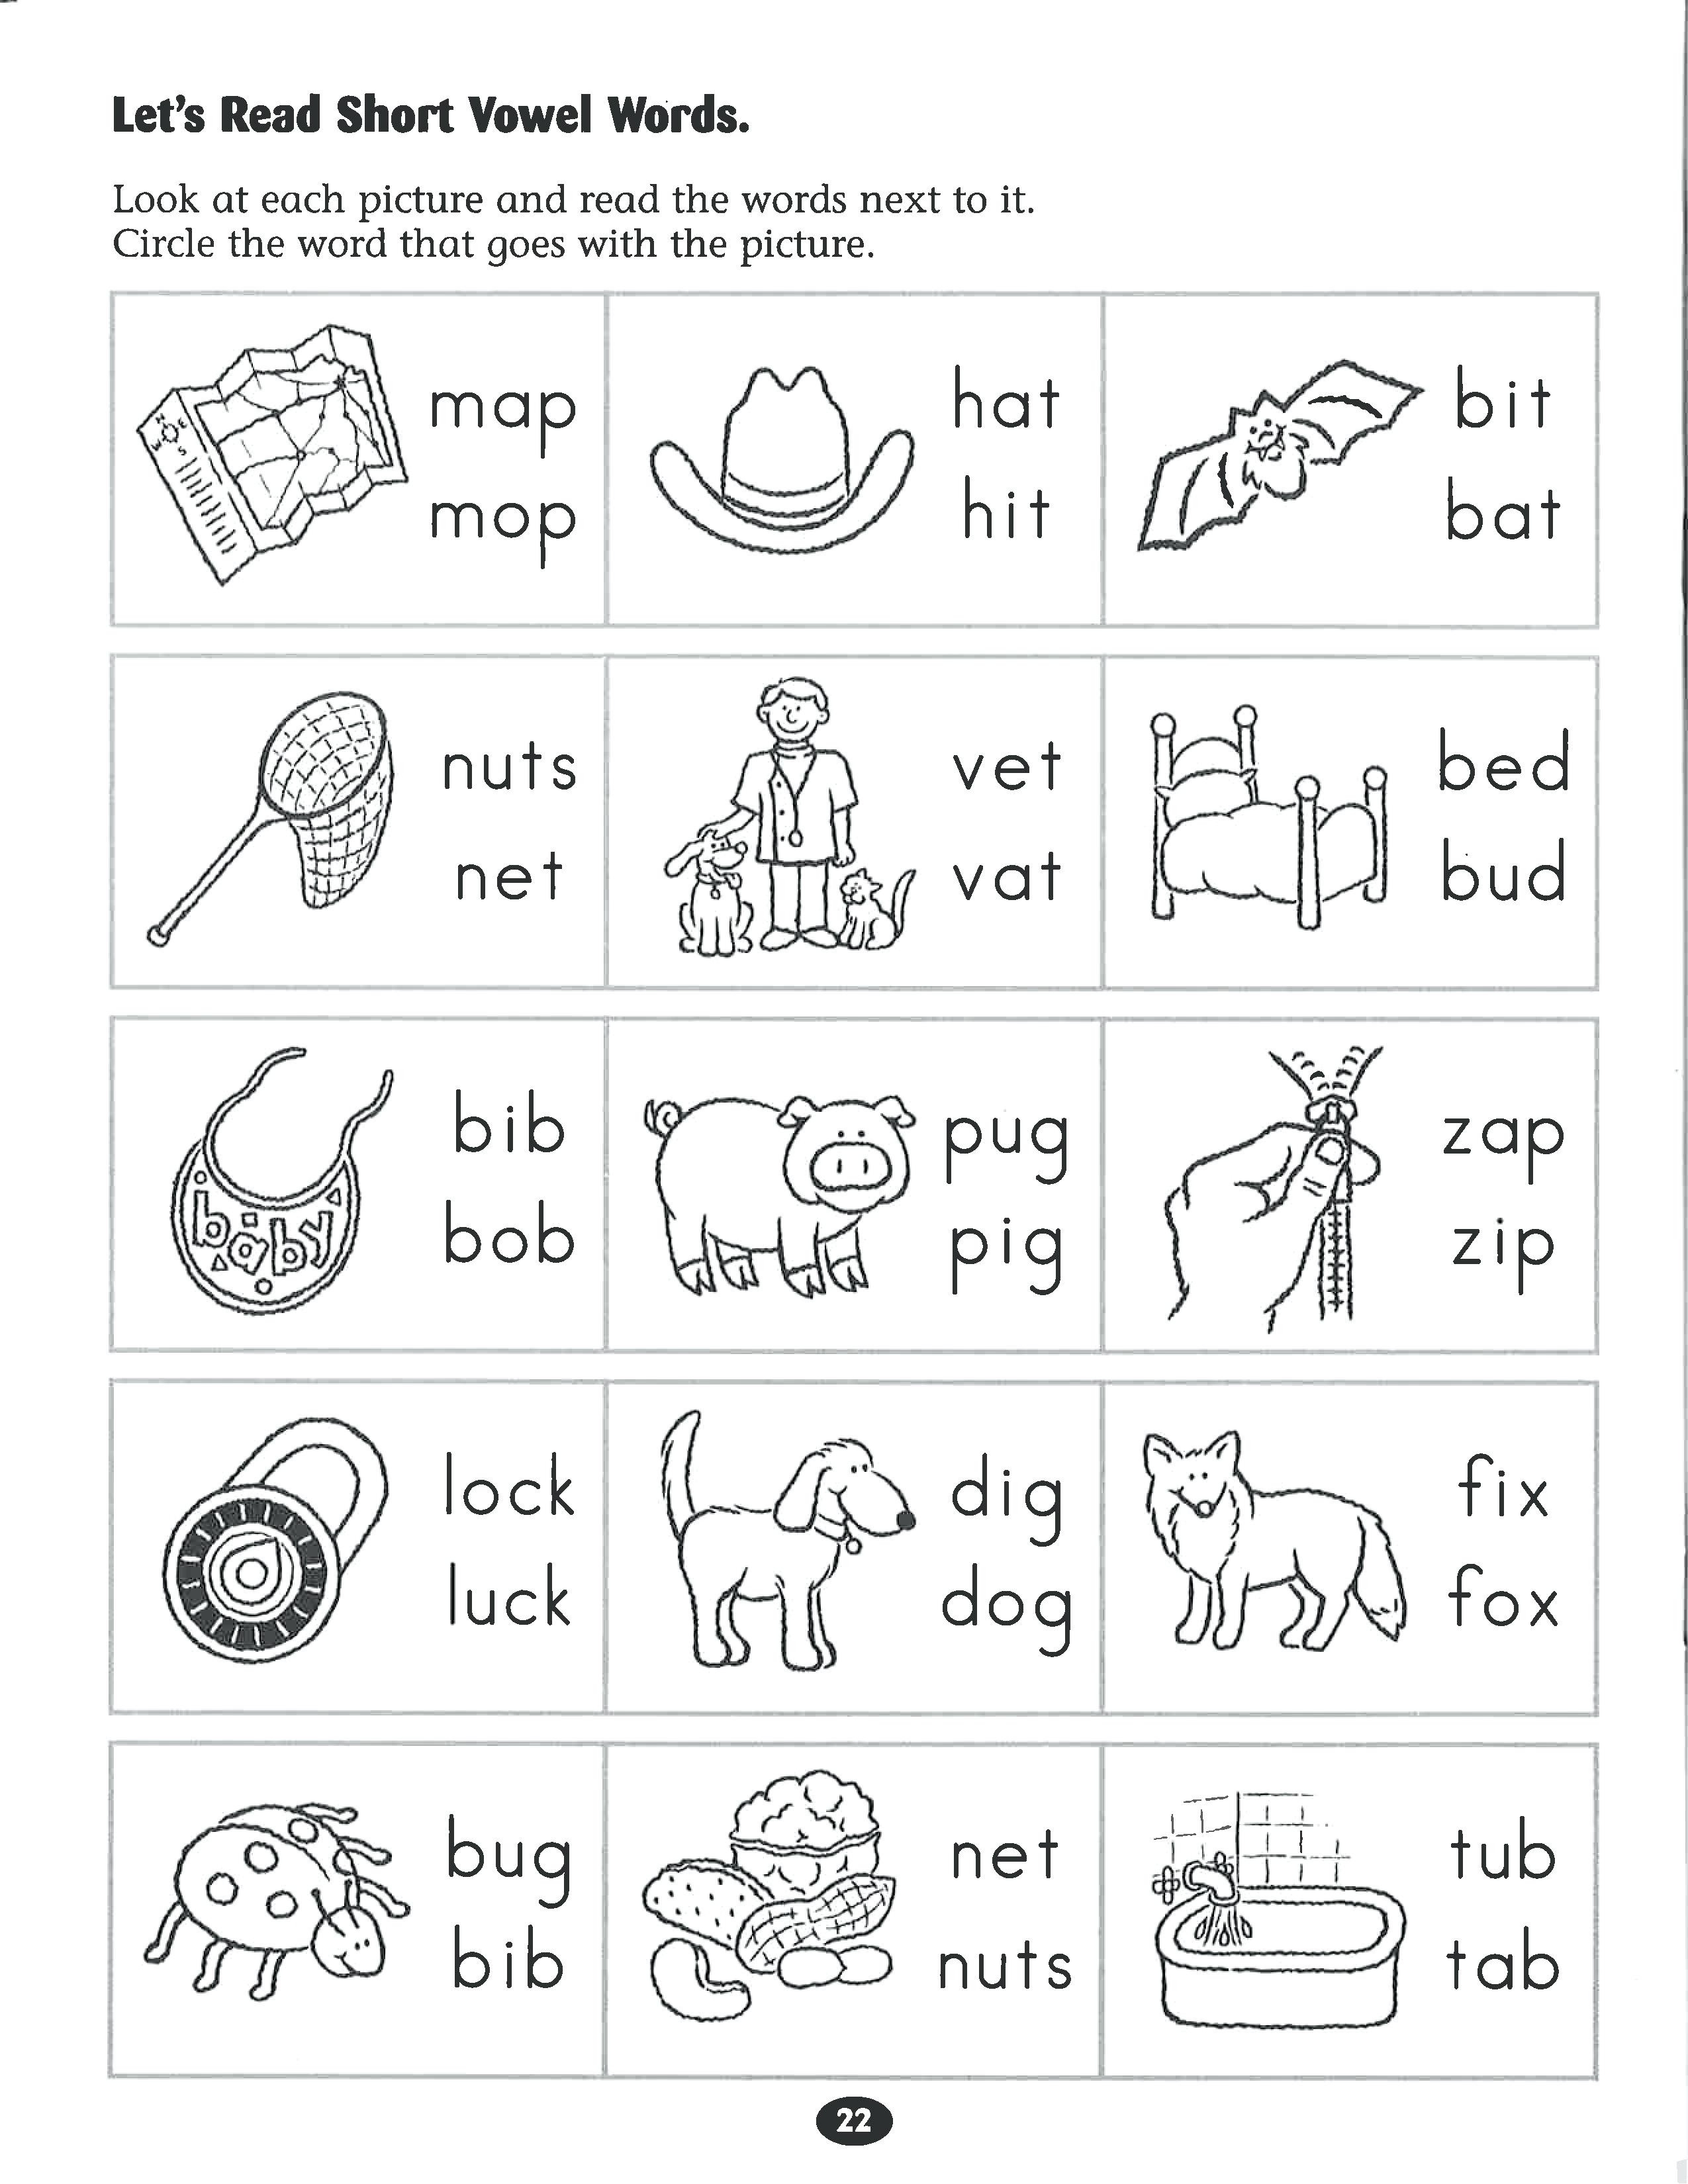 13-best-images-of-missing-short-vowel-worksheets-middle-vowel-sound-vowel-letters-writing-and